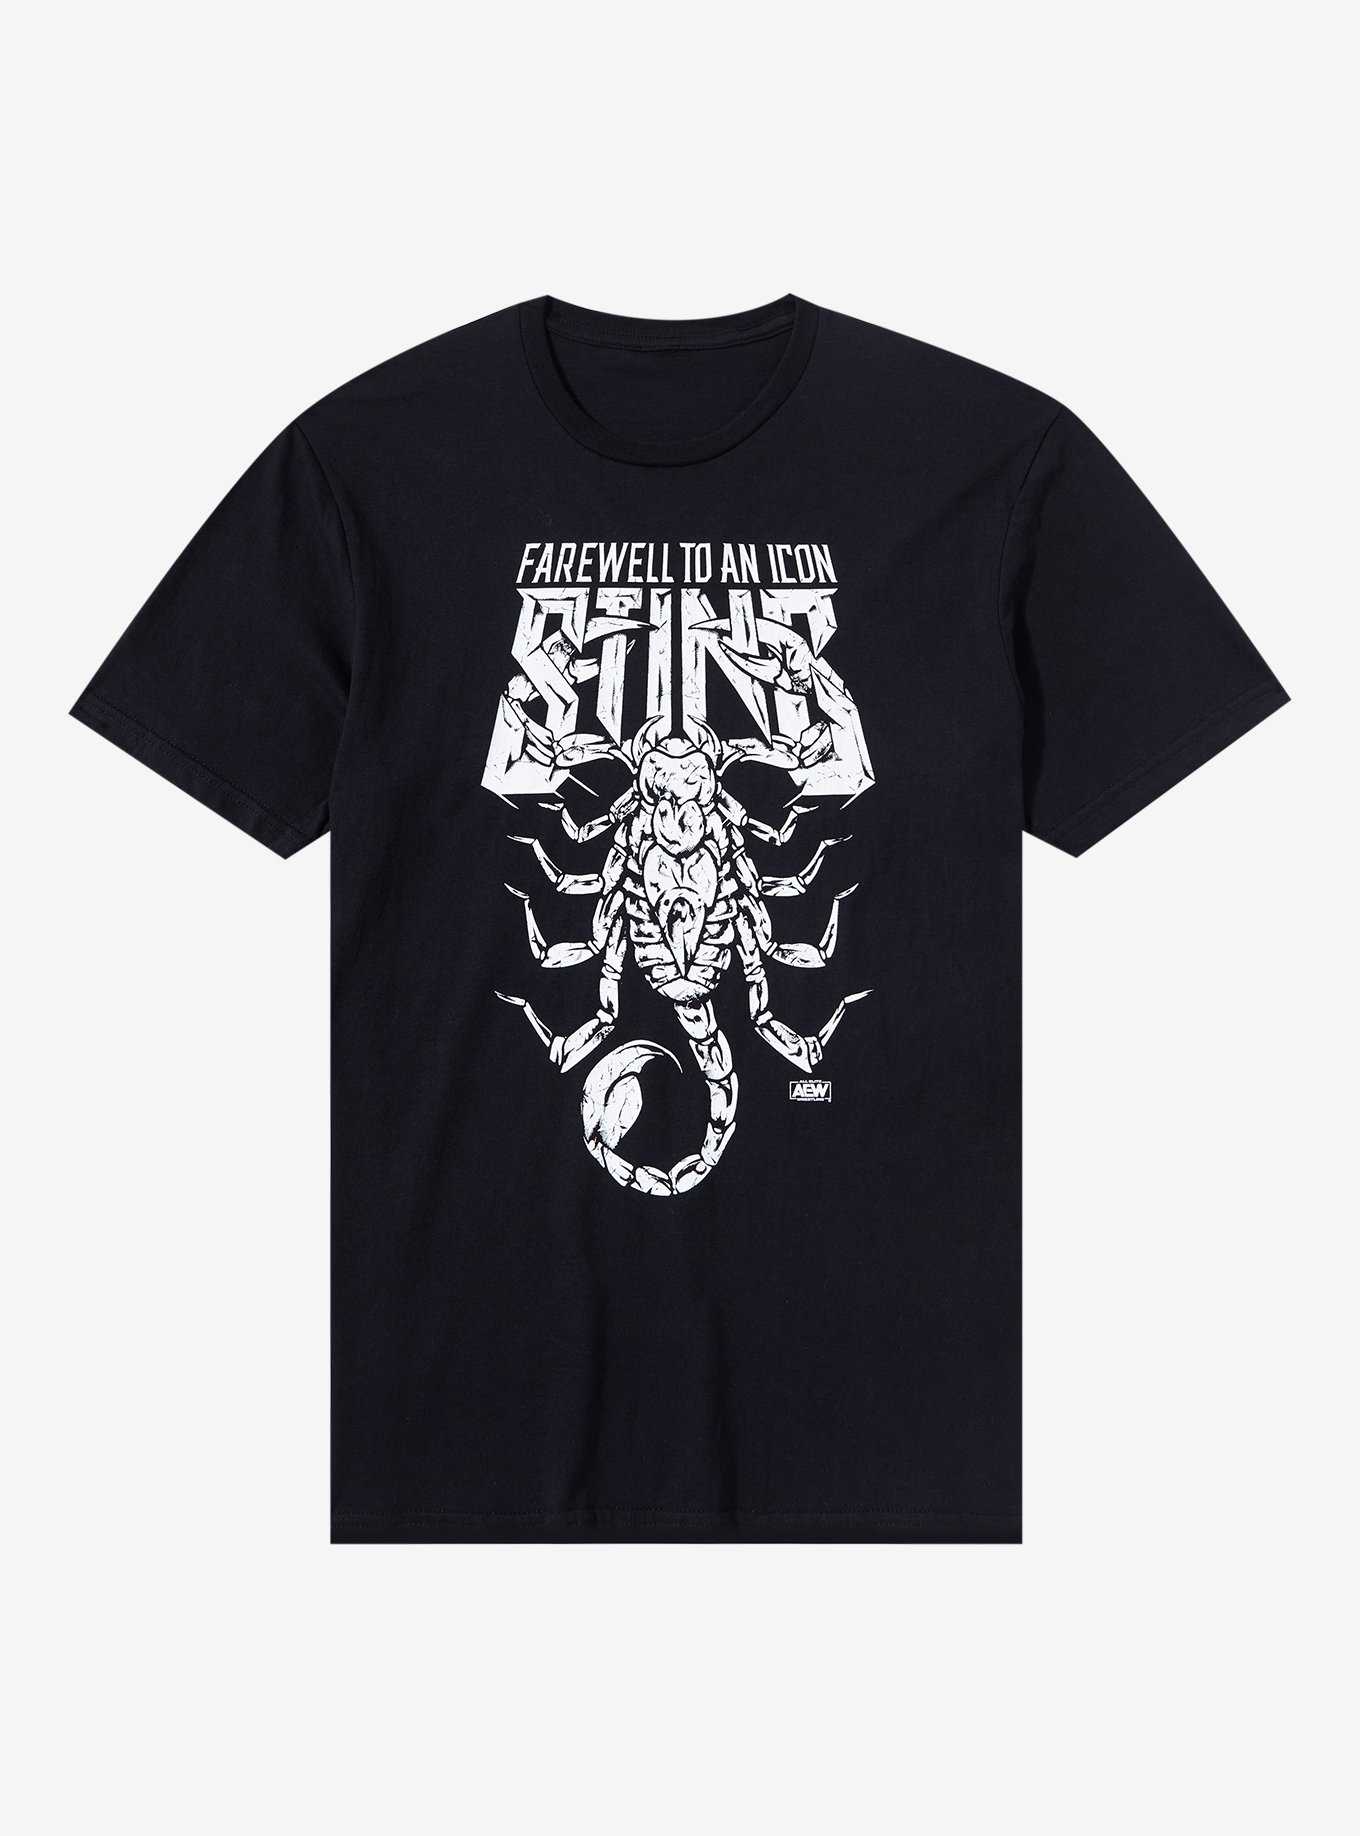 All Elite Wrestling Sting Farewell T-Shirt, , hi-res